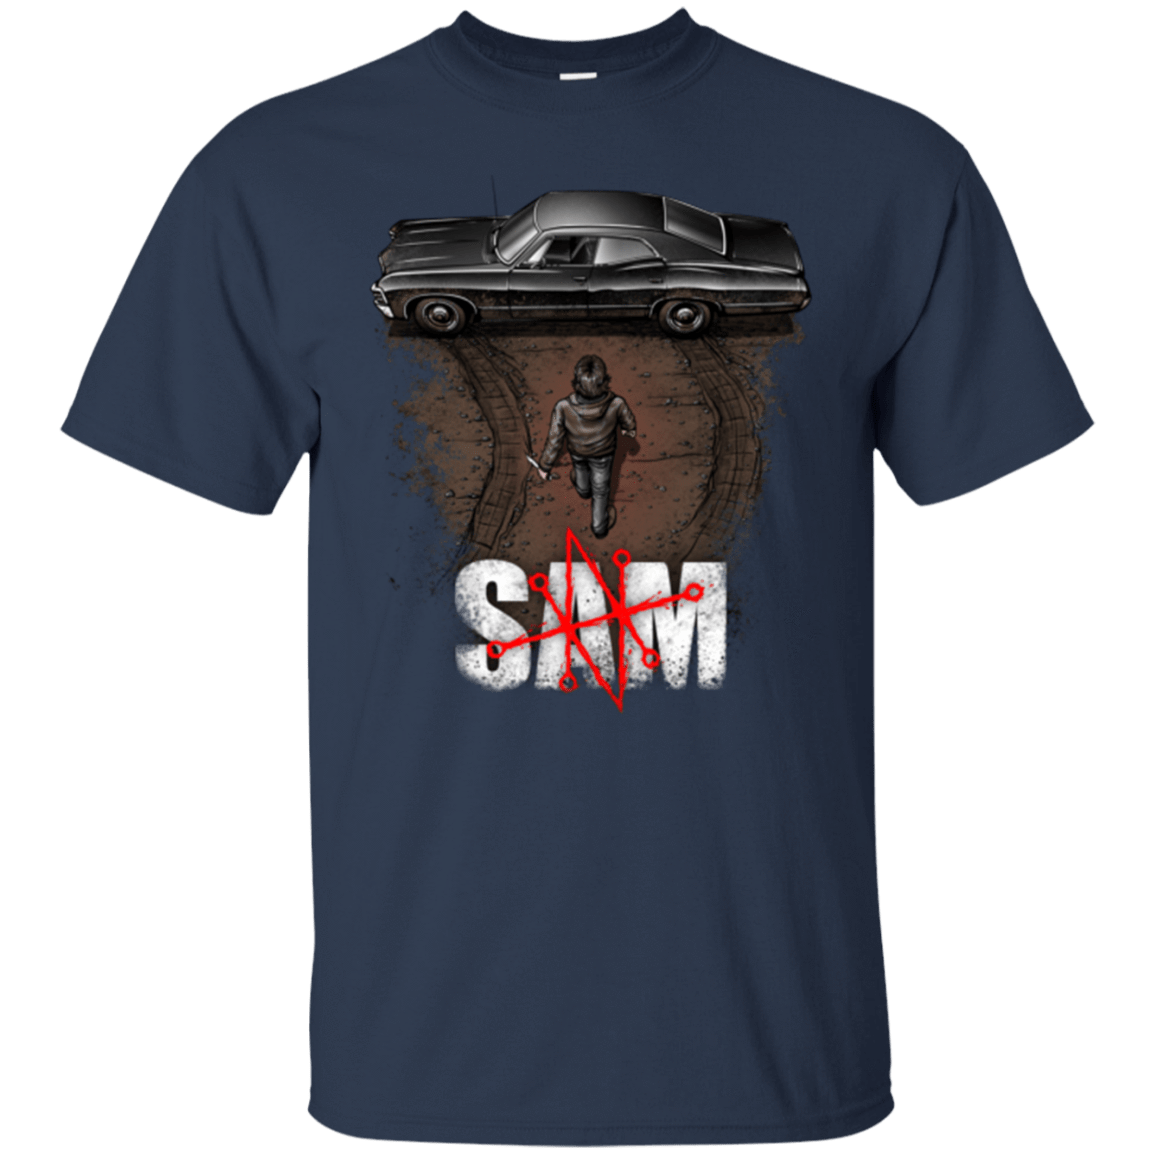 T-Shirts Navy / Small Sam T-Shirt